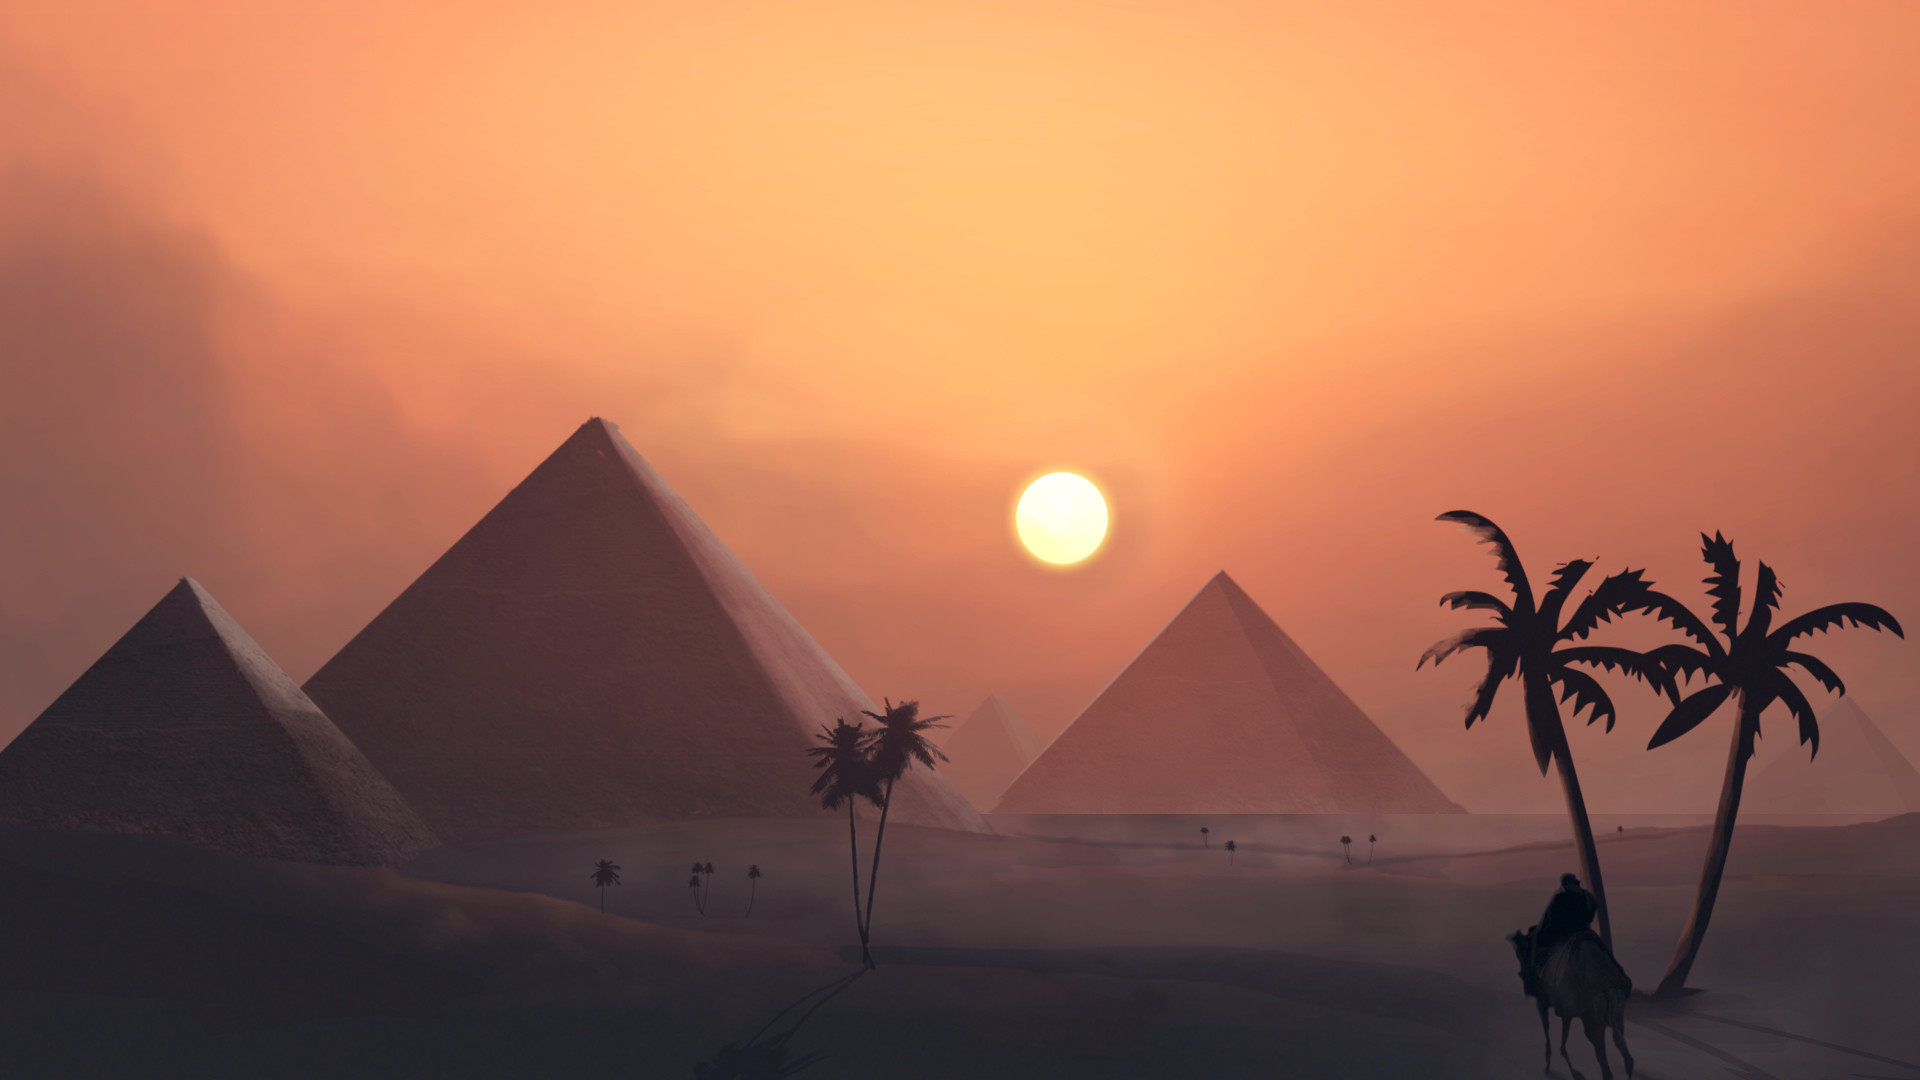 General 1920x1080 landscape illustration pyramid digital art Egypt desert